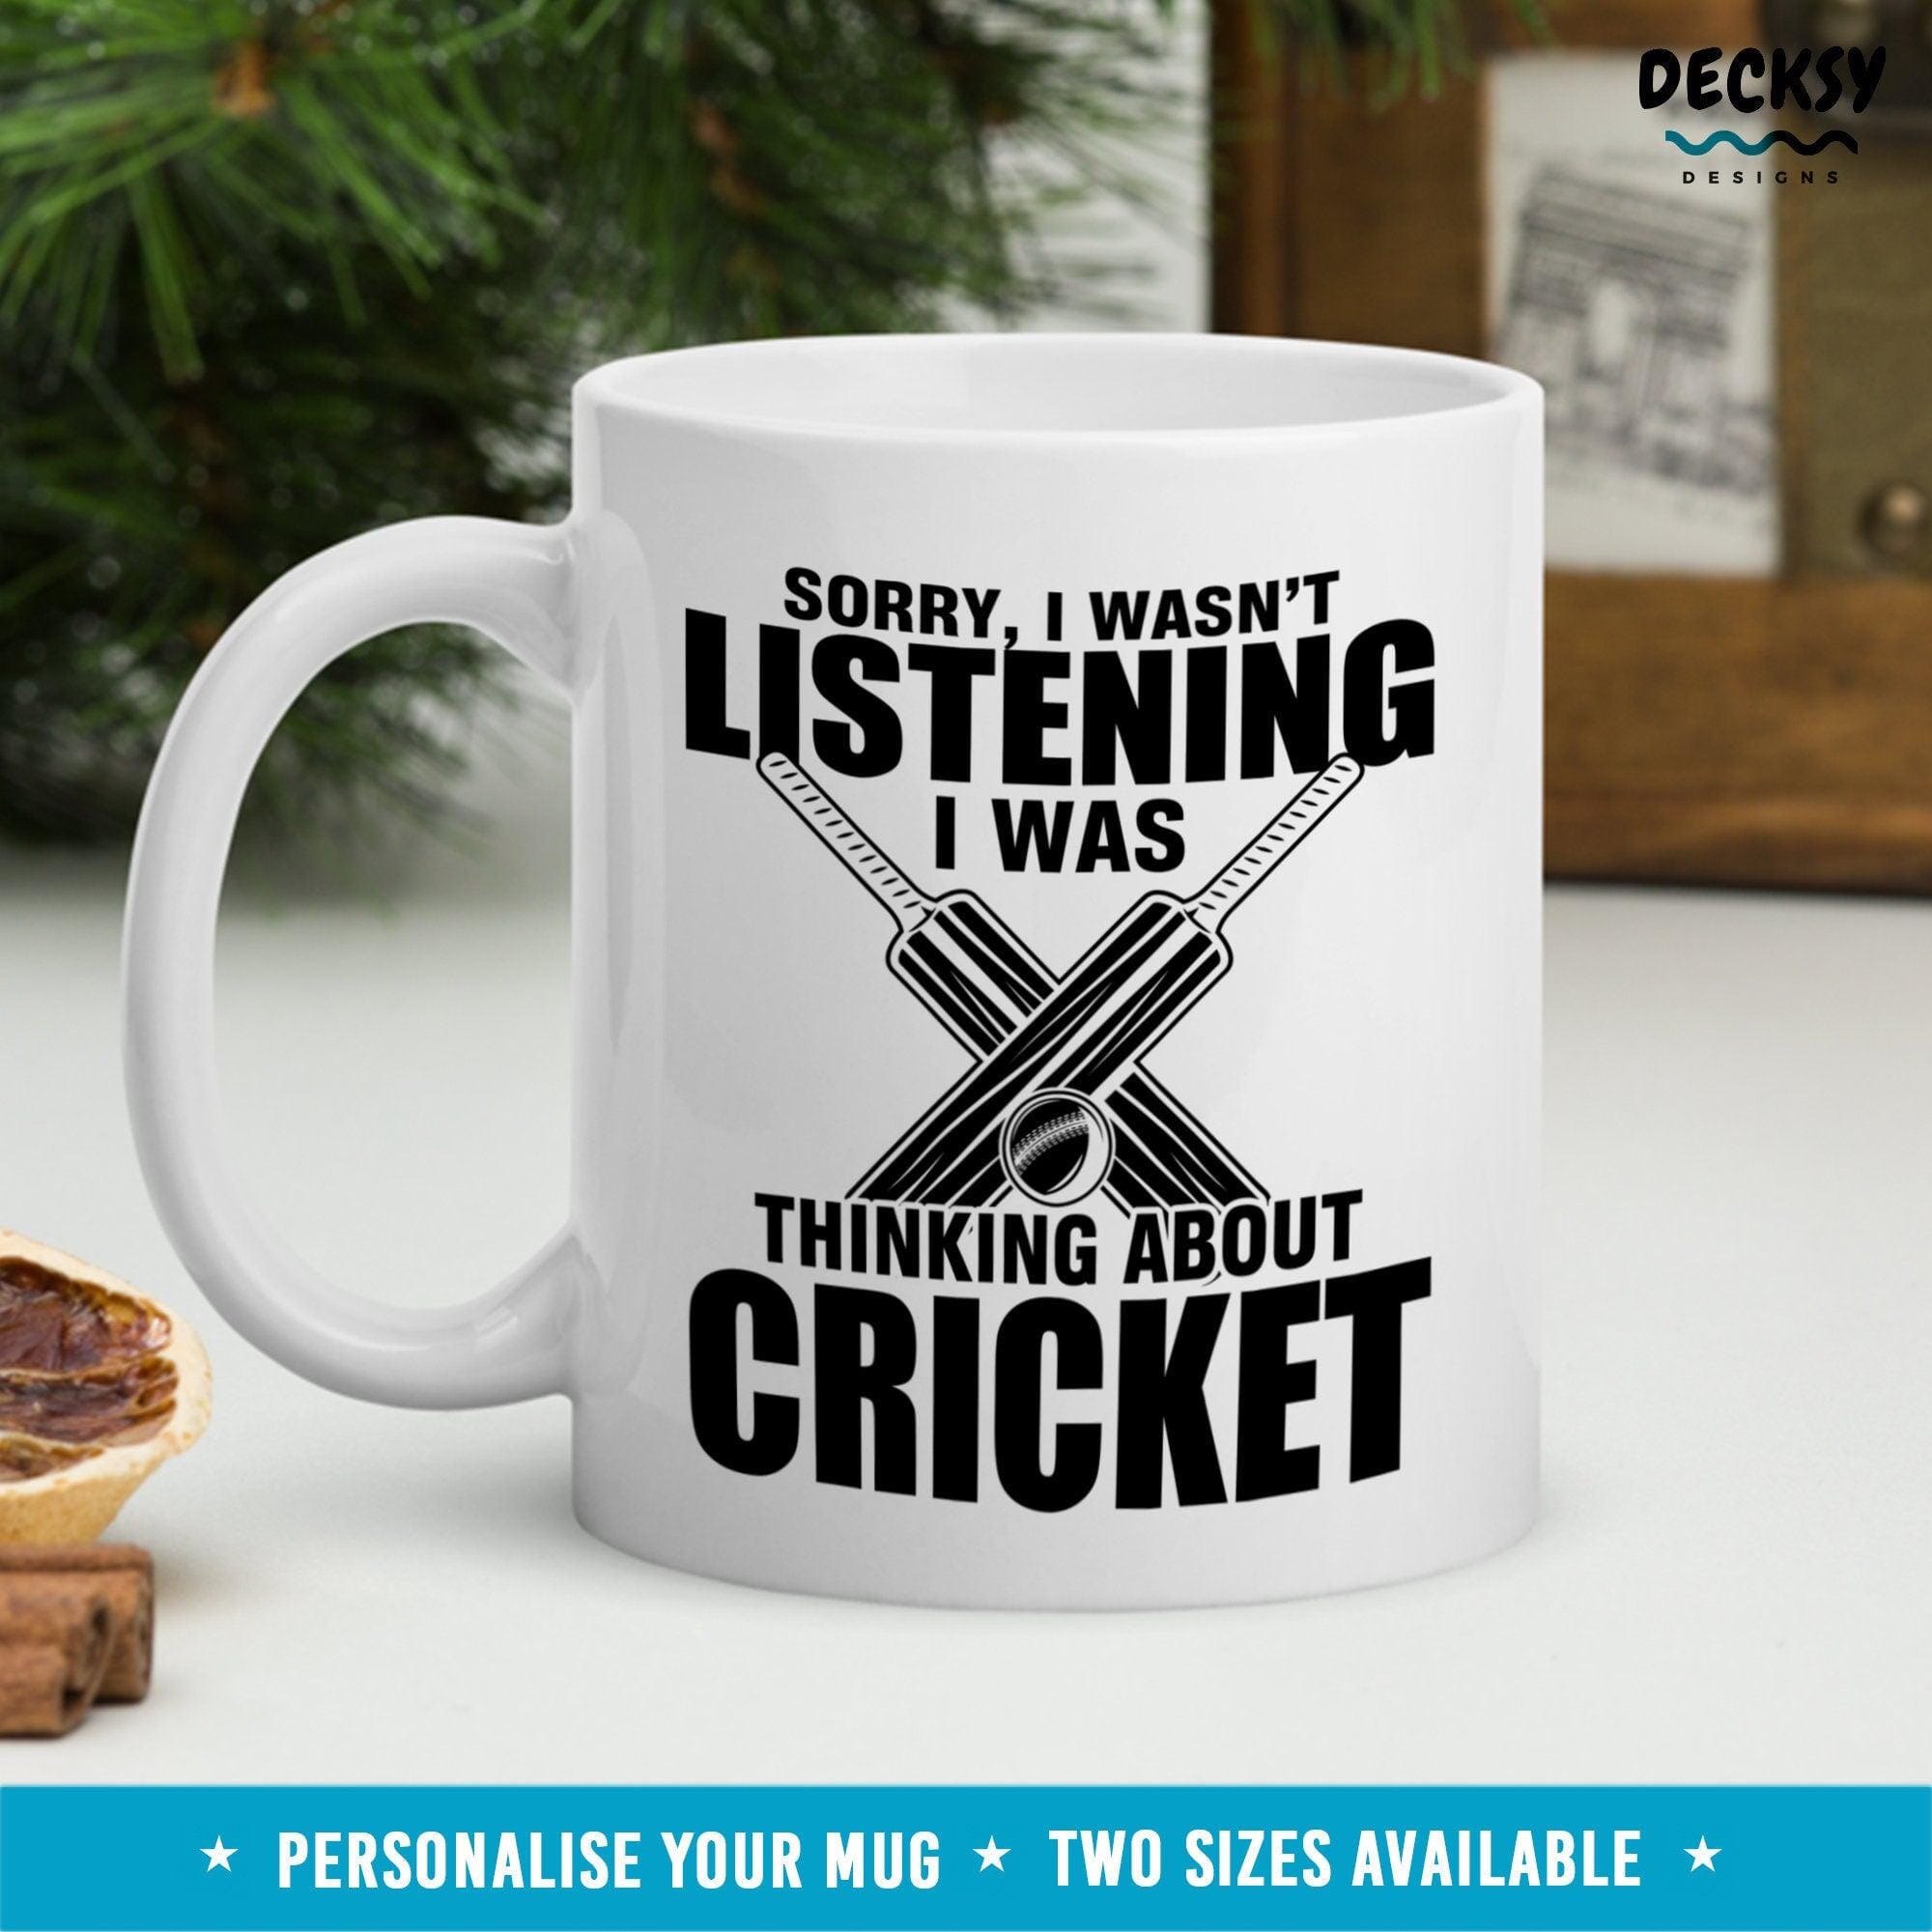 Funny Cricket Mug, Cricket Gift-Home & Living:Kitchen & Dining:Drink & Barware:Drinkware:Mugs-DecksyDesigns-11 Oz-NO PERSONALISATION-DecksyDesigns